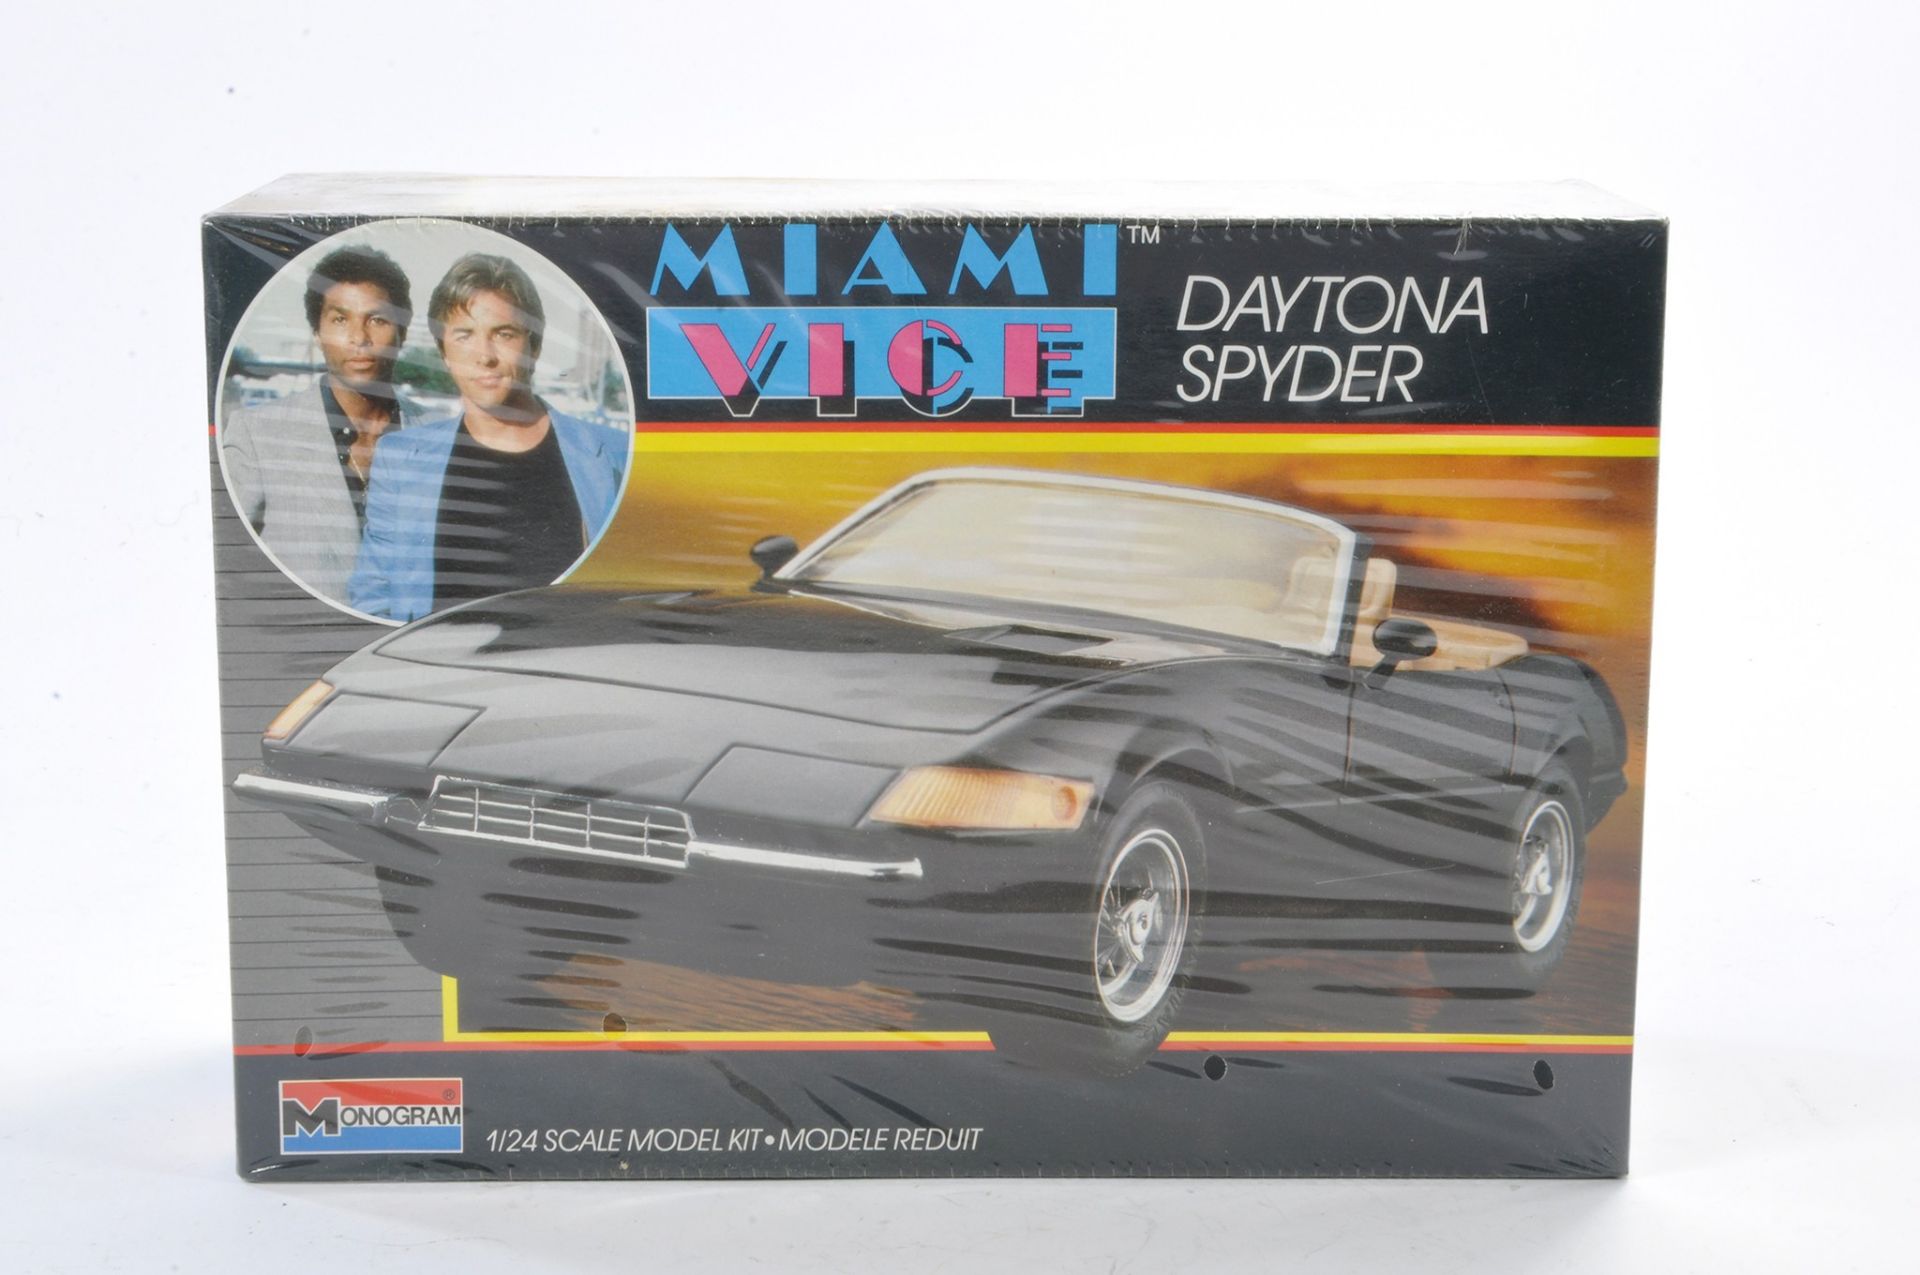 Monogram 1/24 plastic model kit comprising Miami Vice Daytona Spider. Sealed.